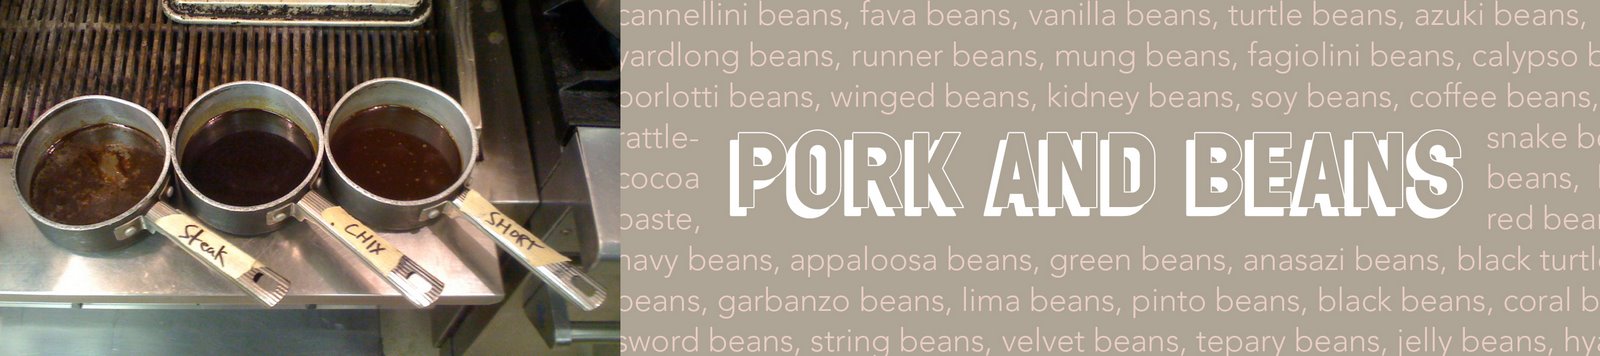 ::pork and beans::